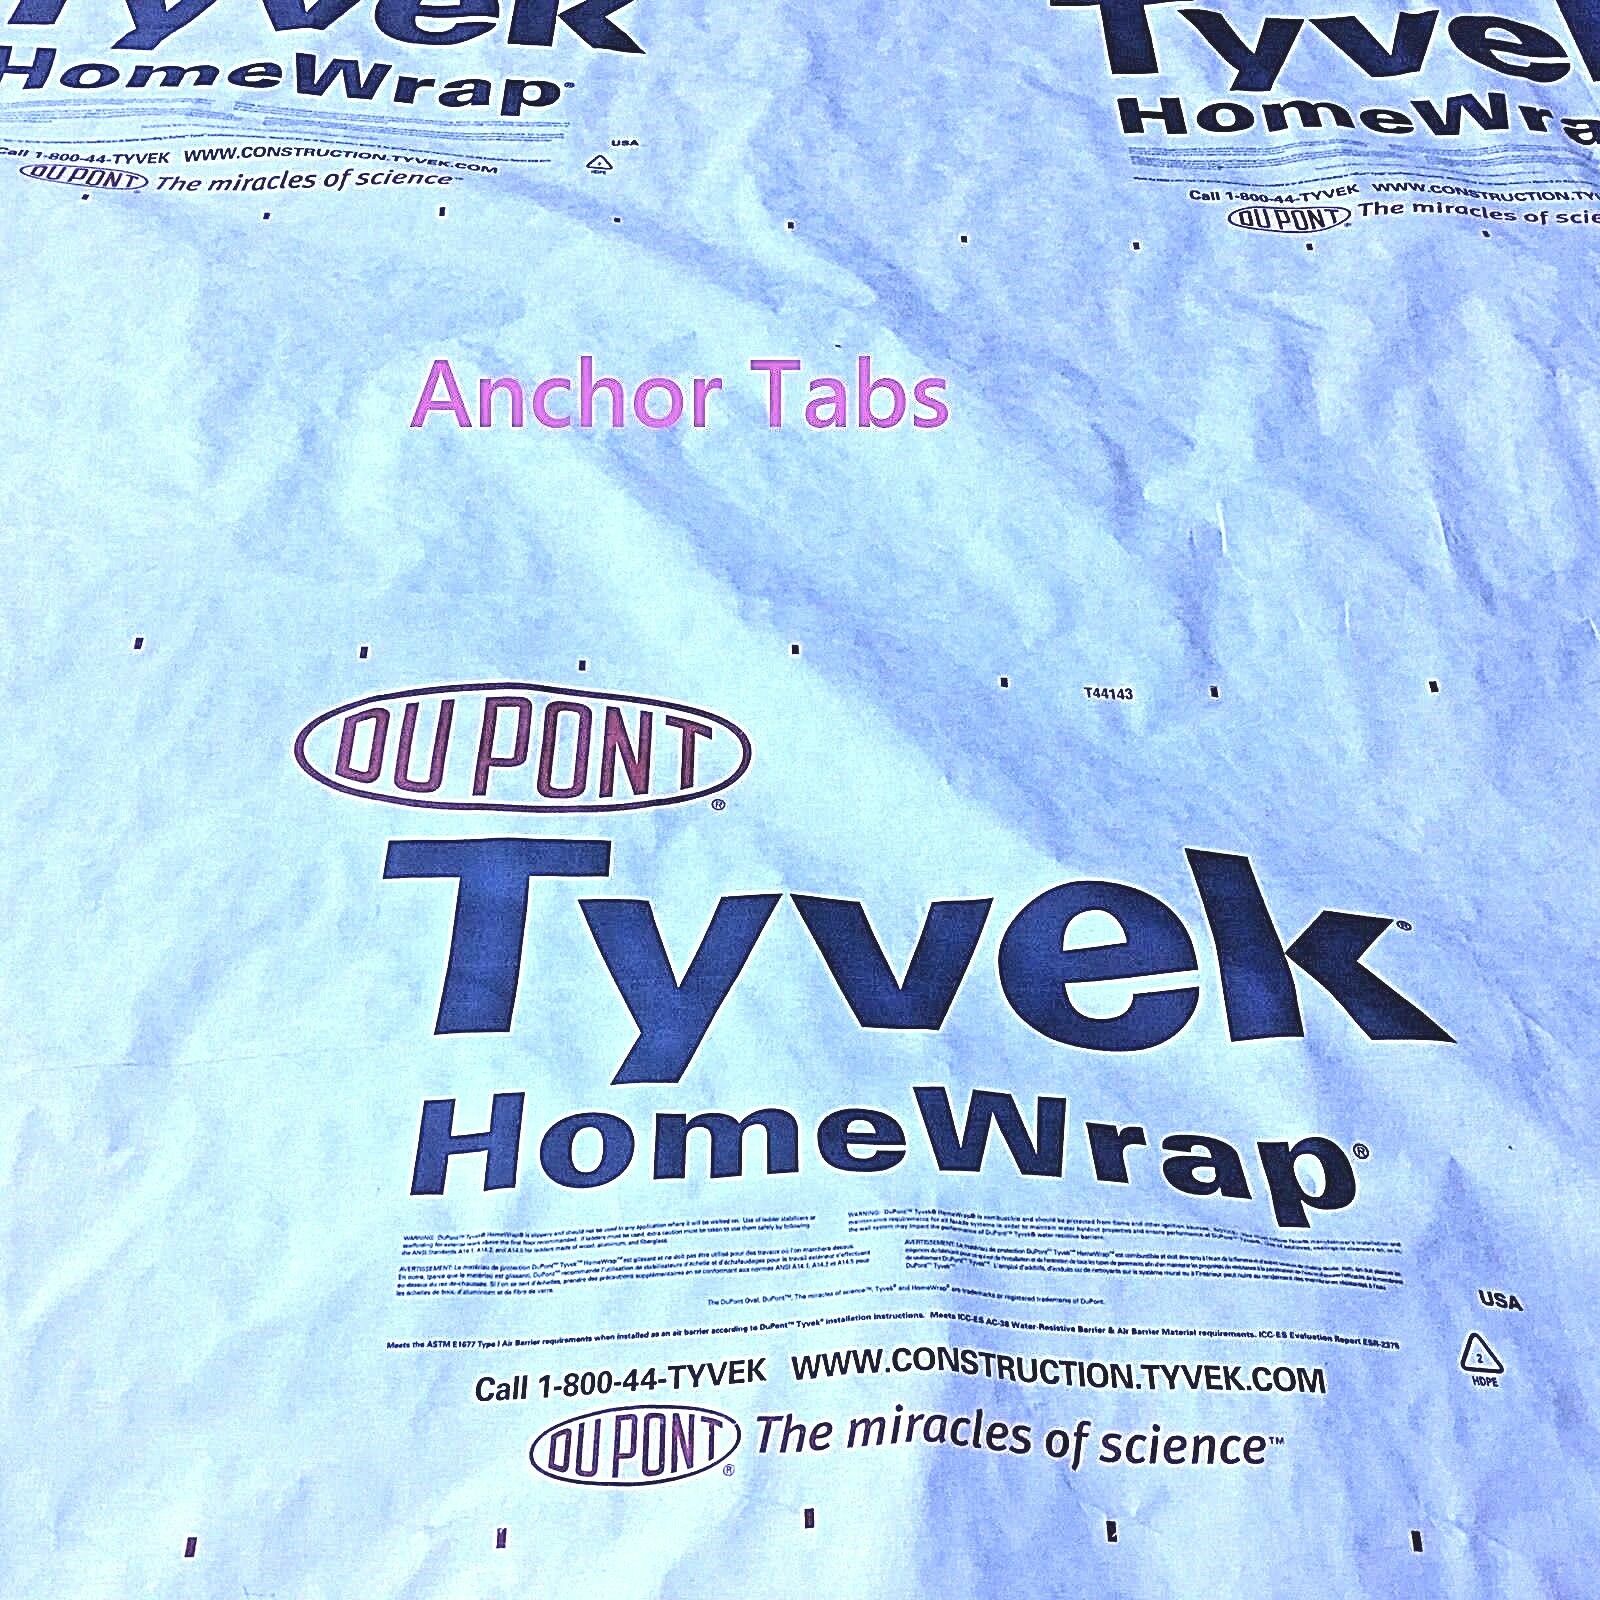 Tyvek Homewrap "sold Per/ft" Hiking Camping Tent Footprint Tarp W/ Anchor Loops